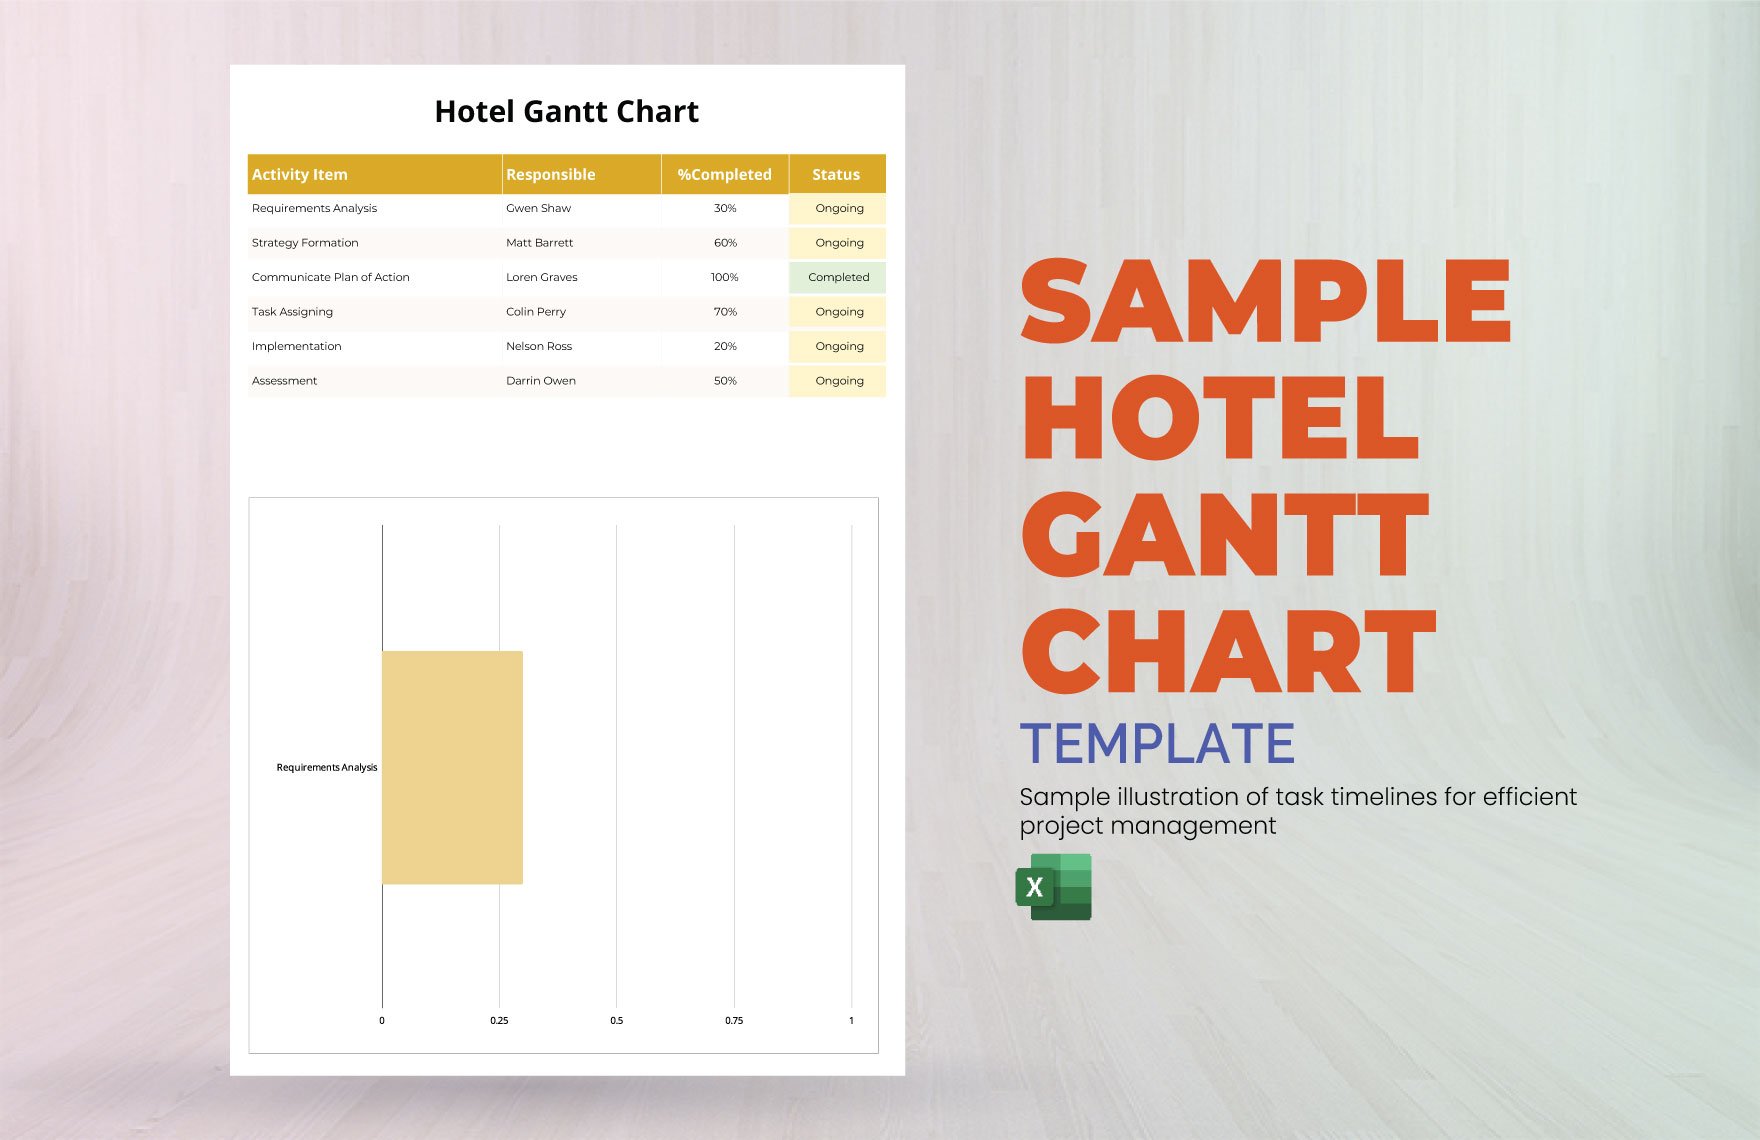 Sample Hotel Gantt Chart Template